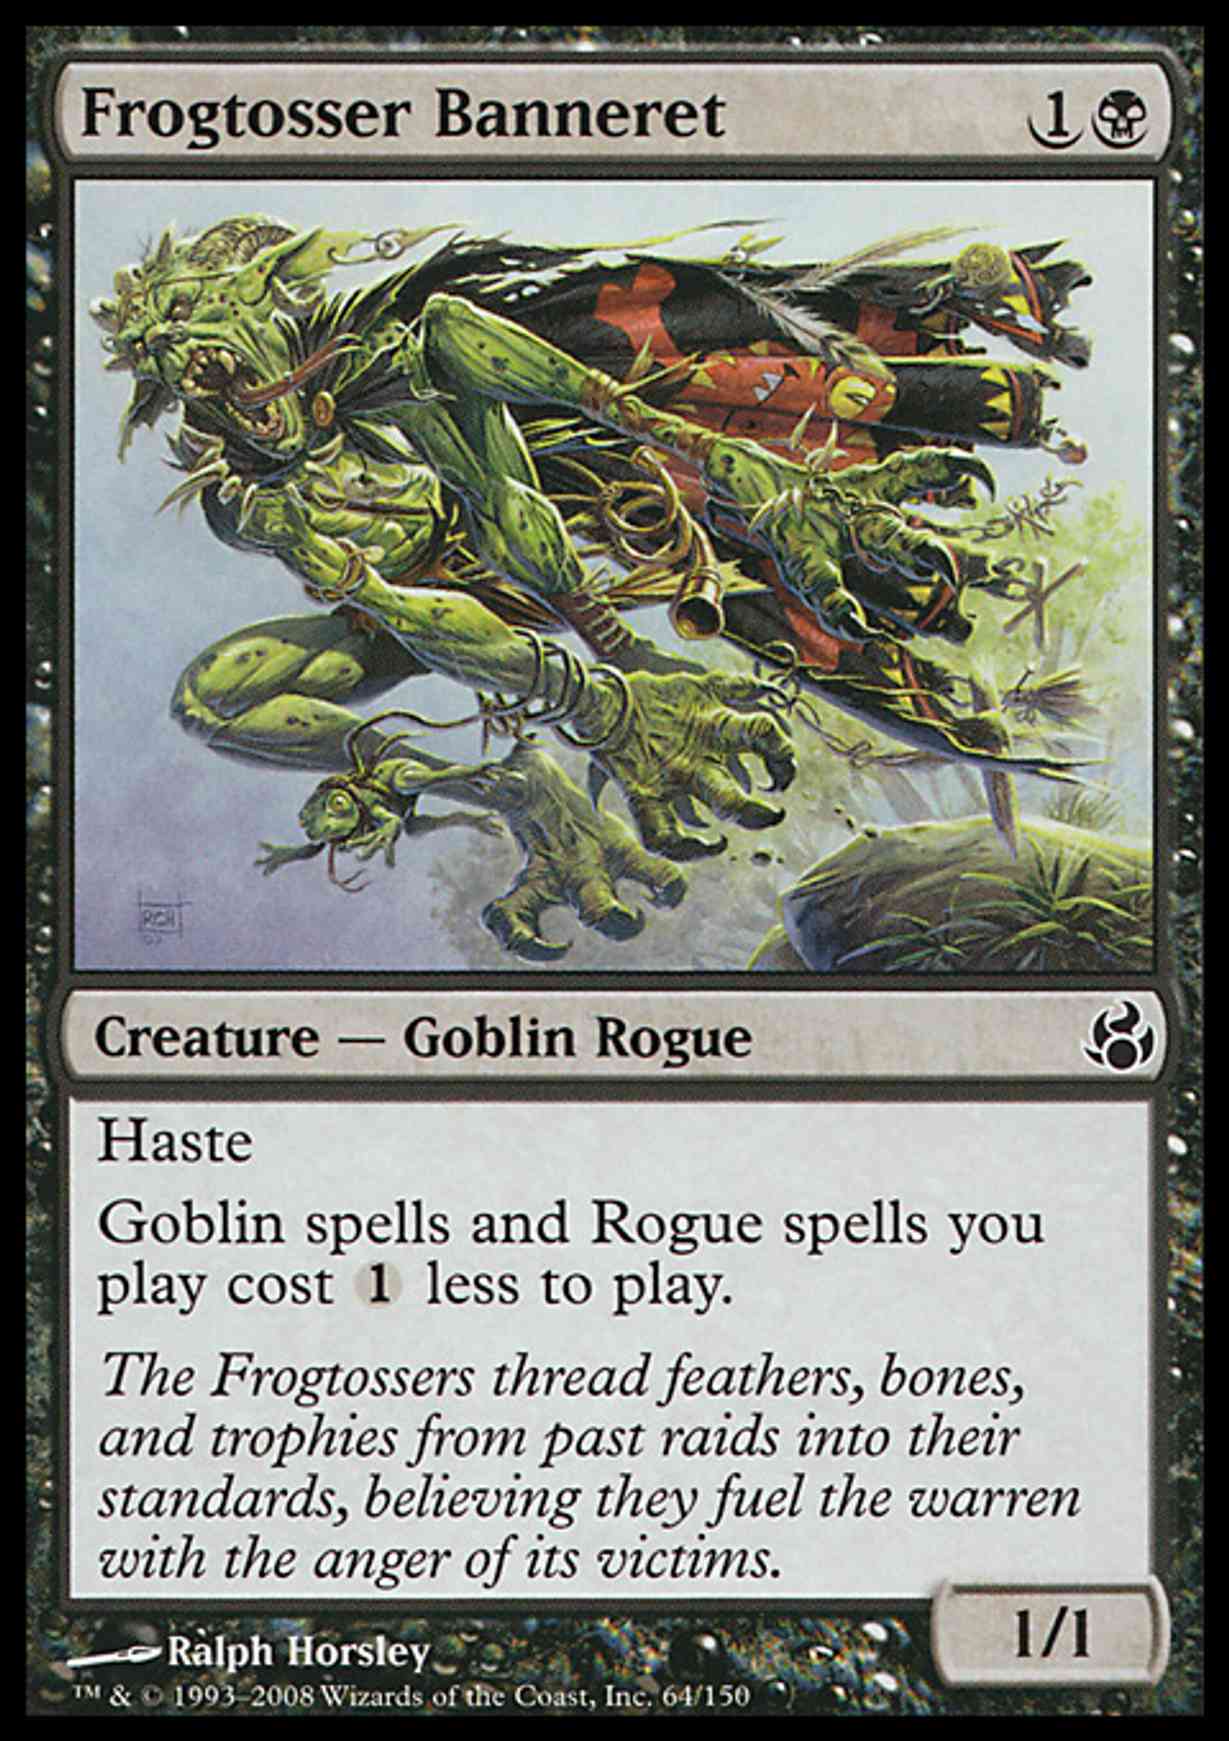 Frogtosser Banneret magic card front